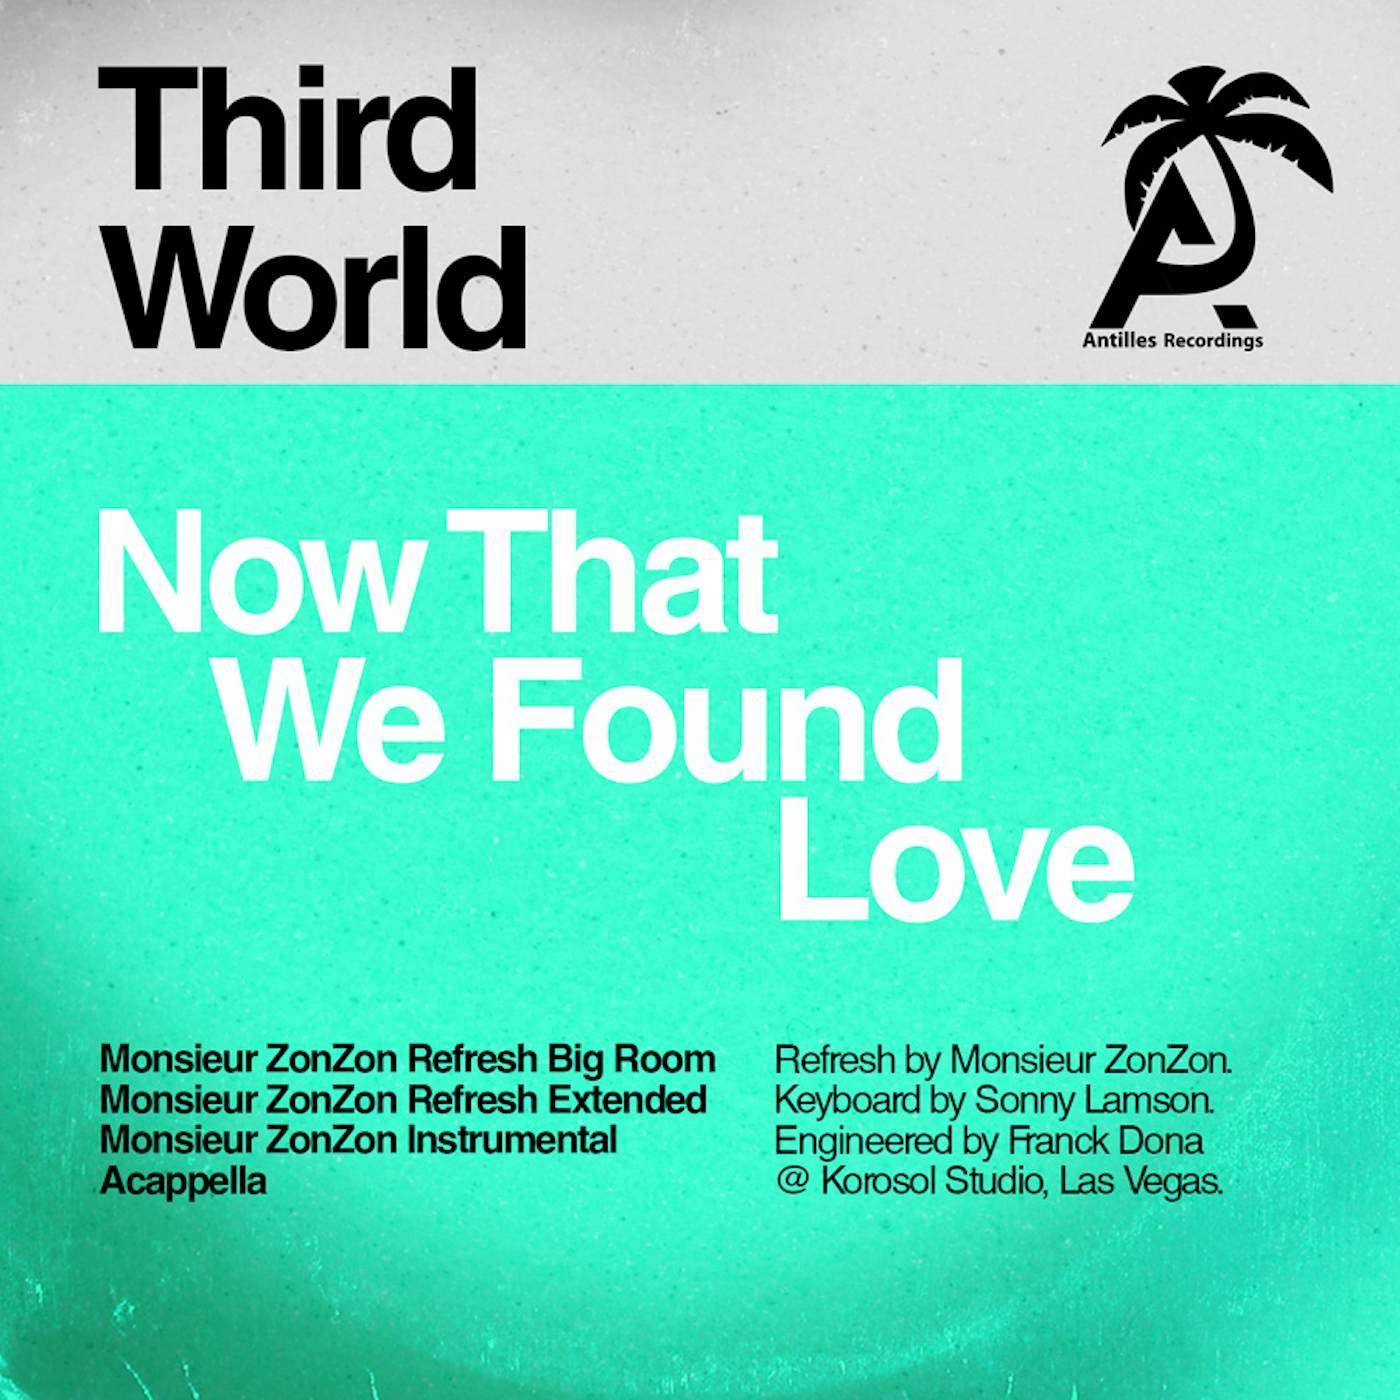 Third World NOW THAT WE FOUND LOVE (MONSIEUR ZONZON) CD